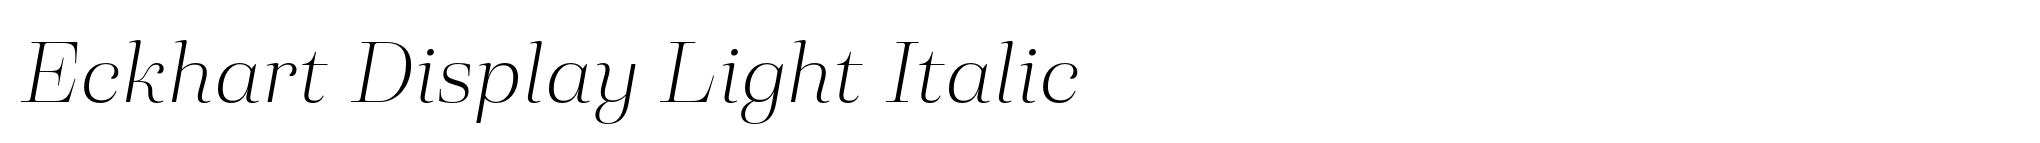 Eckhart Display Light Italic image